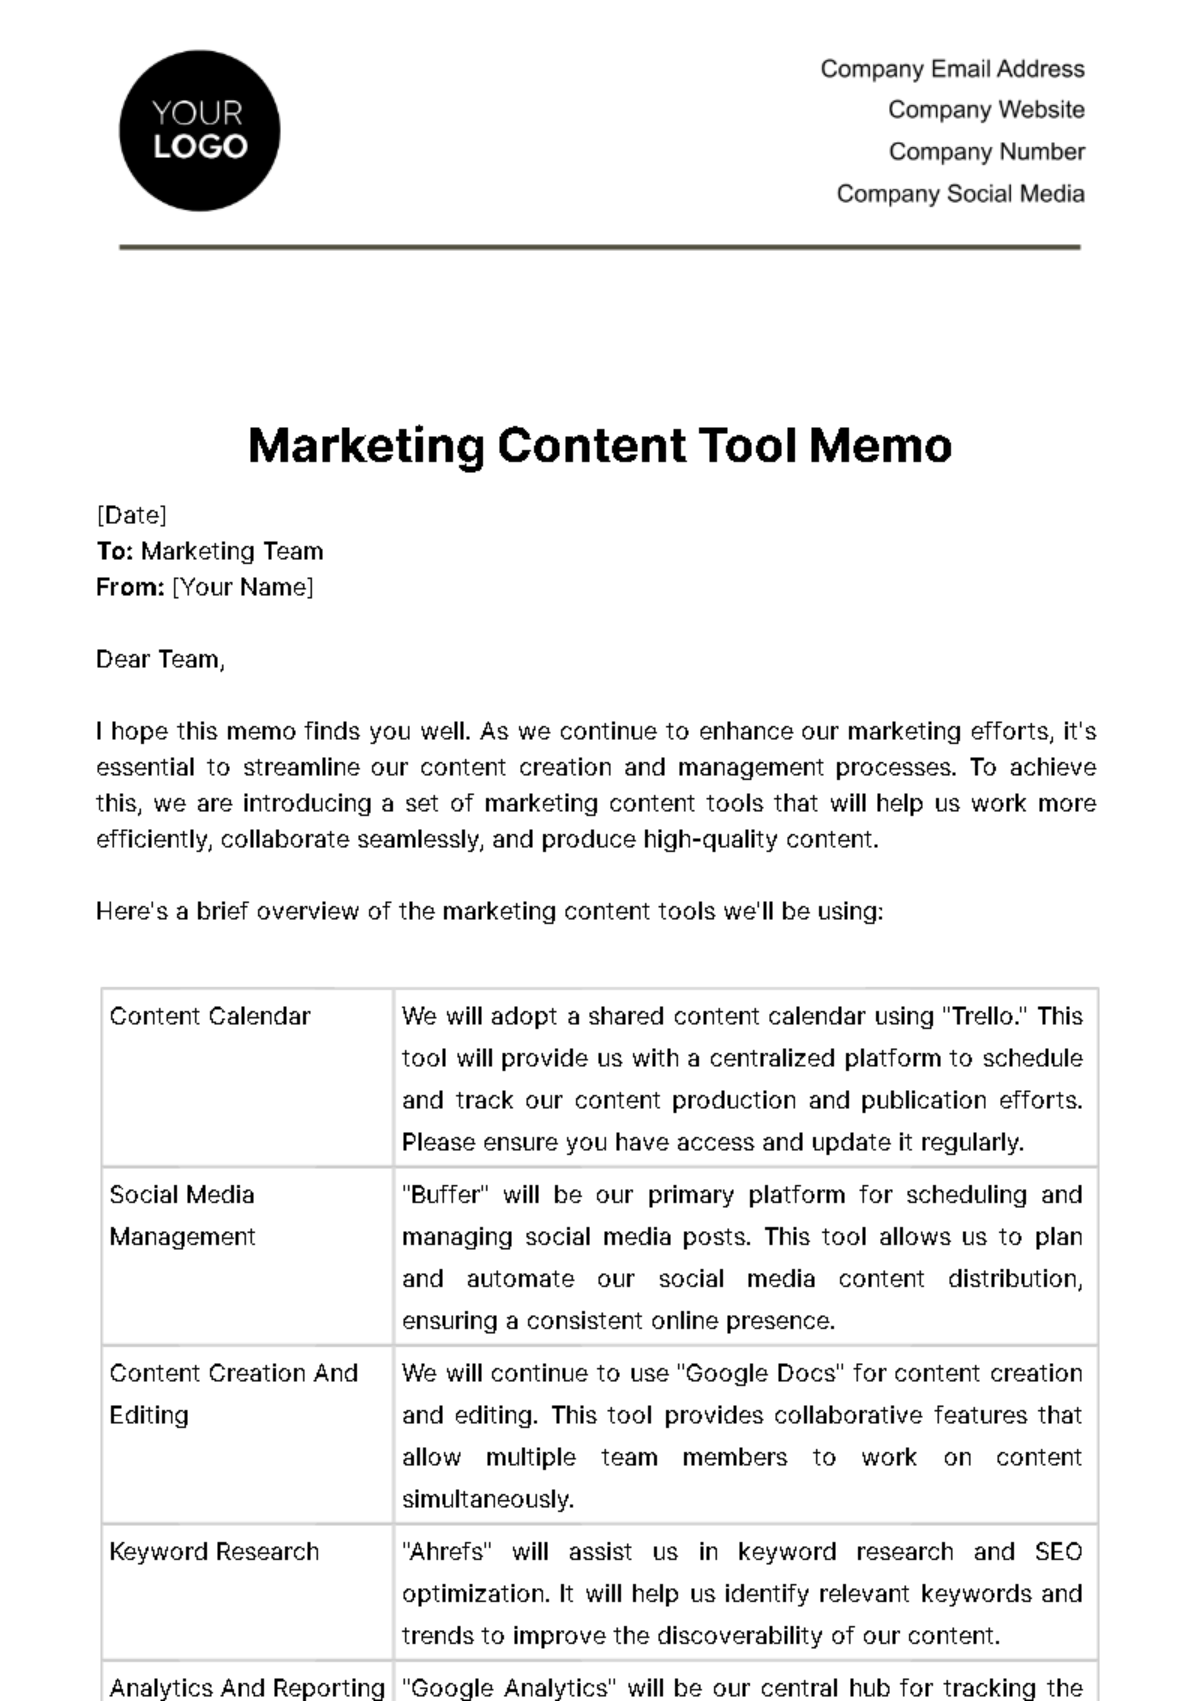 Marketing Content Tool Memo Template